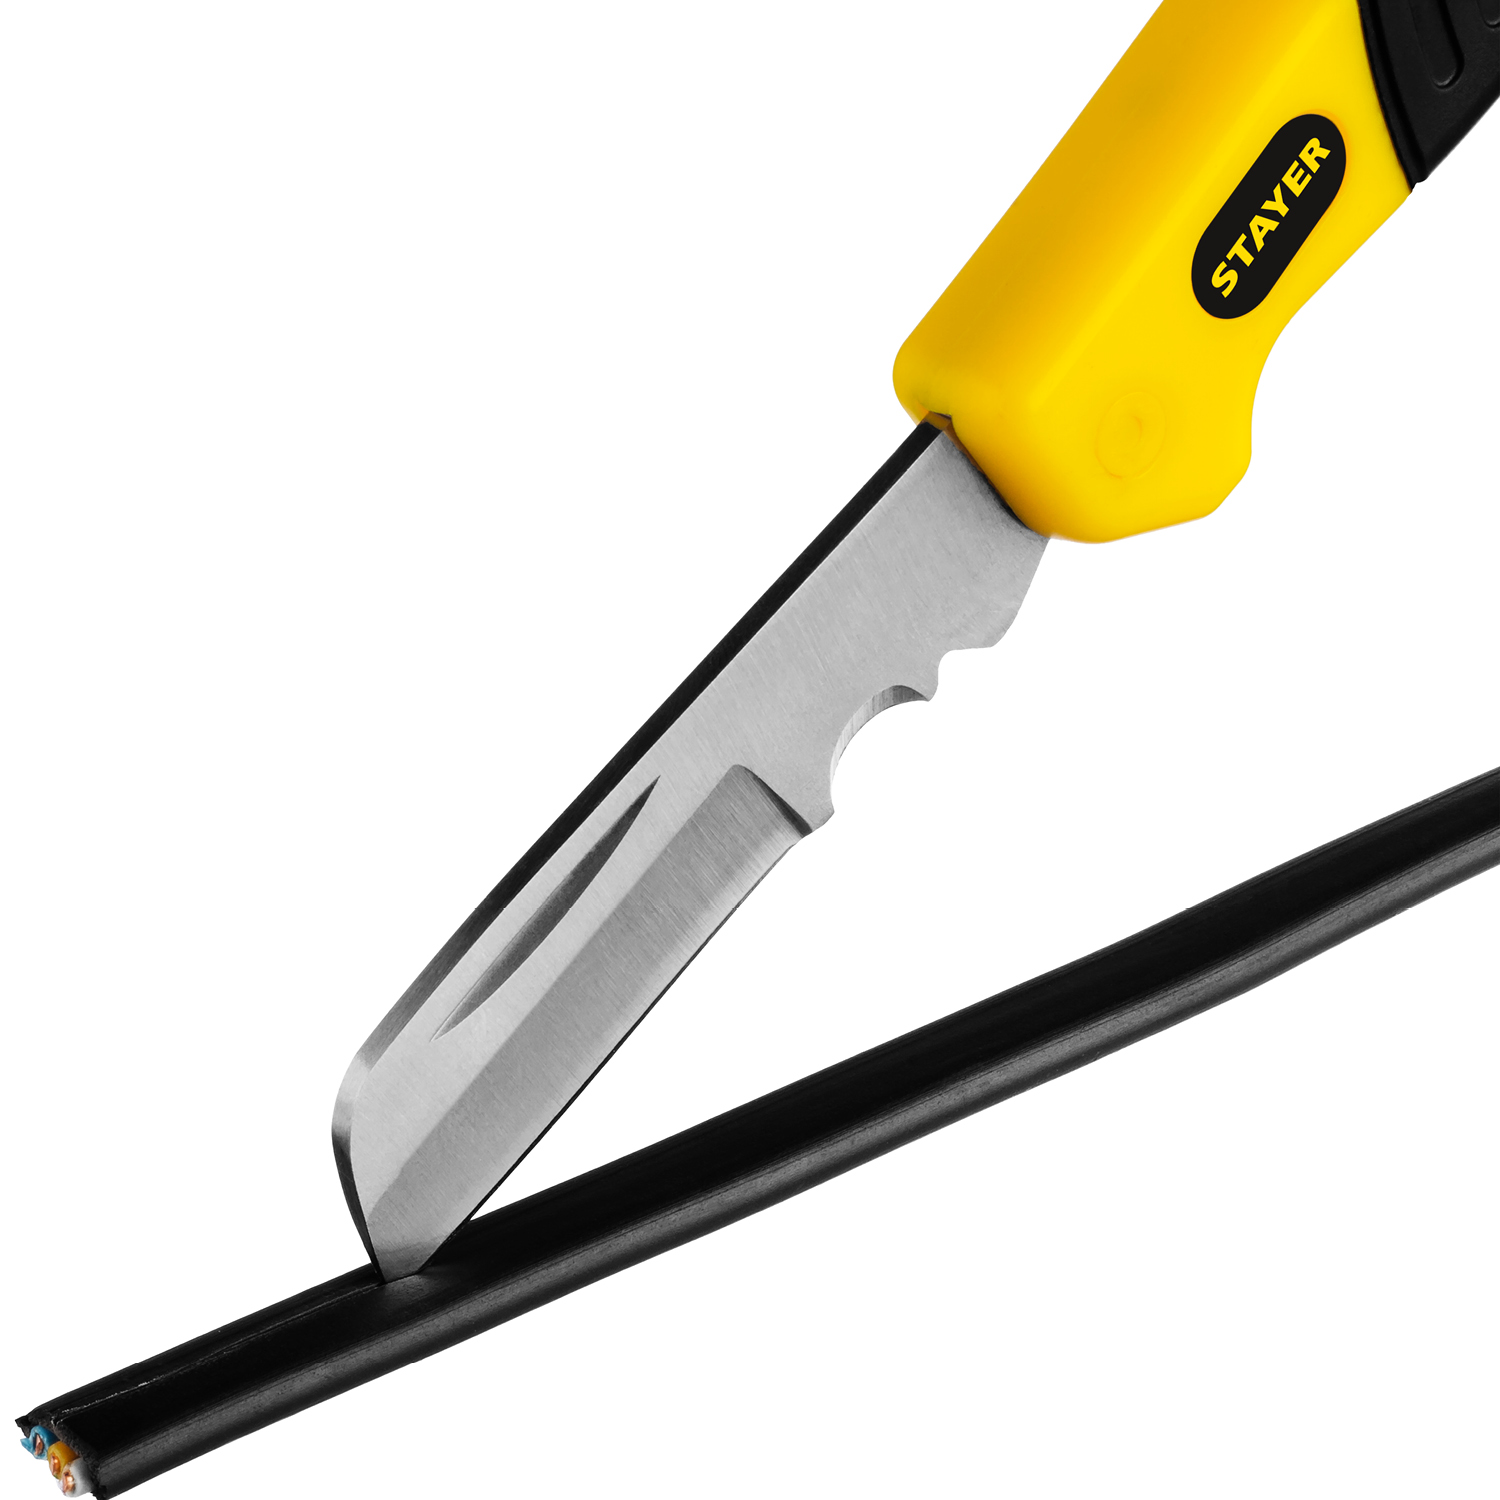 Нож складной для снятия изоляции 19мм SK-R STAYER Professional 45408